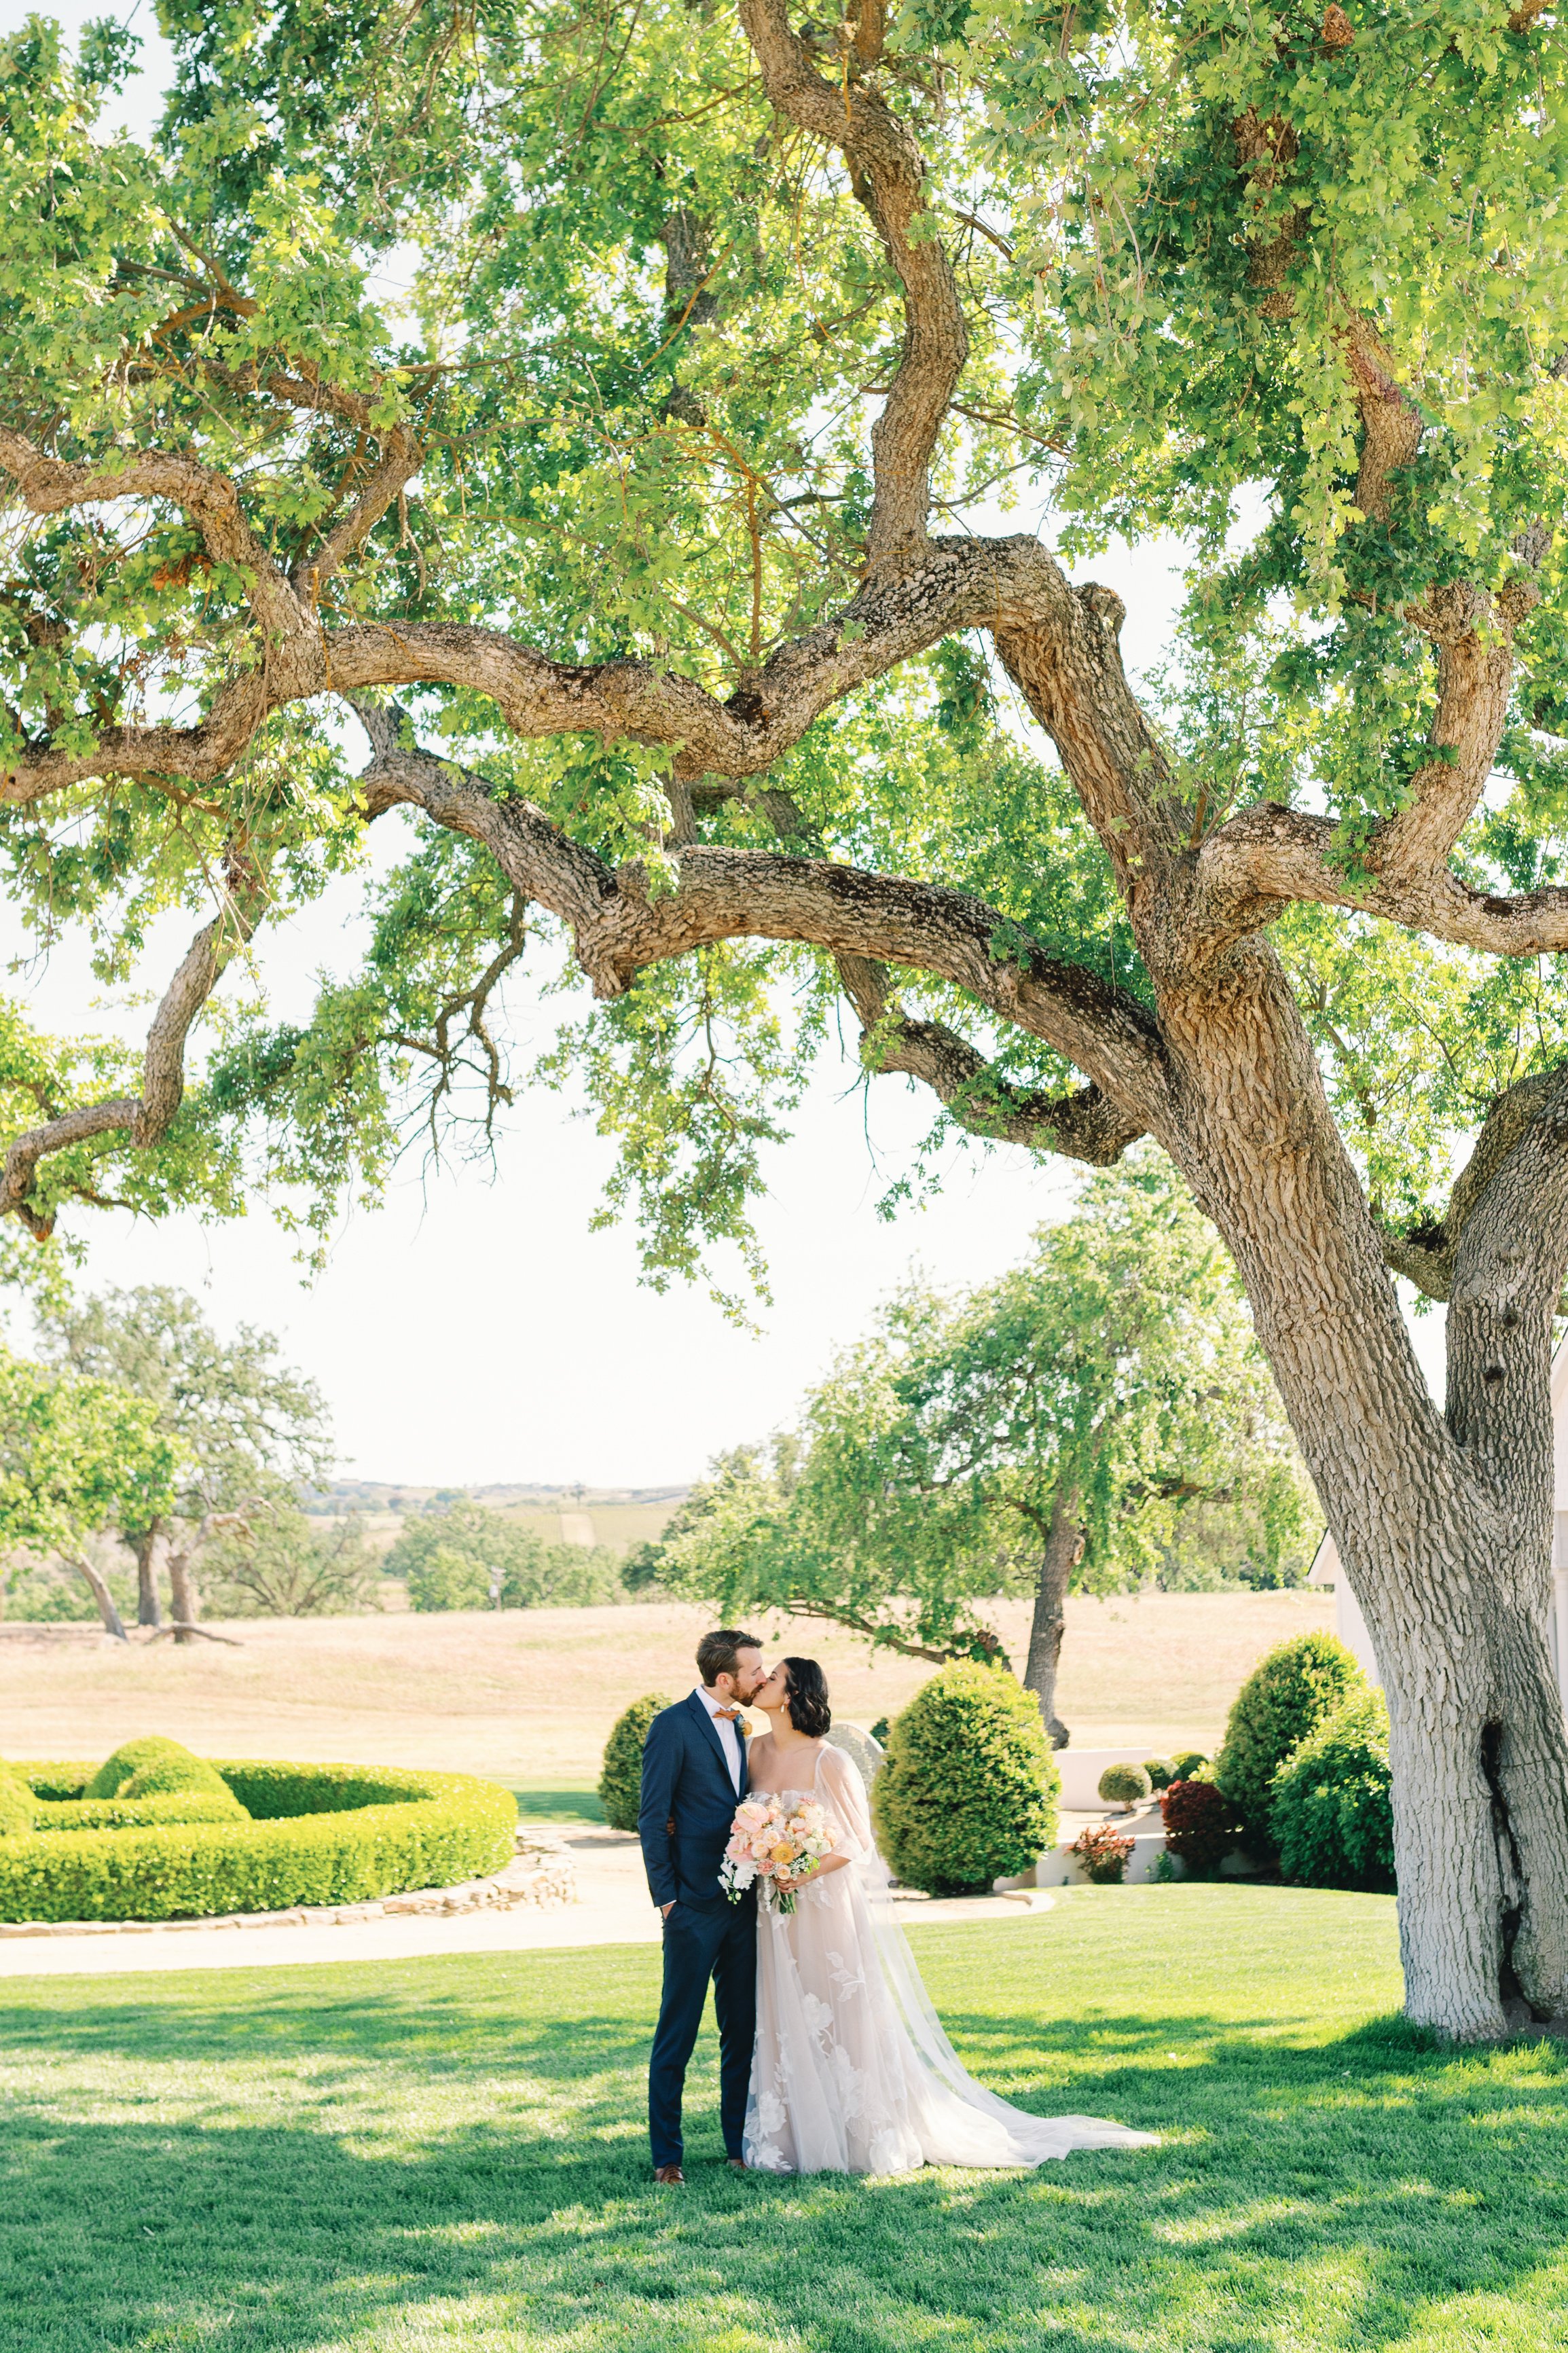 www.santabarbarawedding.com | Augusta Ottillia Photography | Megan Rose Events | Fallen Oaks Estate | Brooke Edelman | Meagan Fondren | Bride and Groom Kissing Under Oak Tree